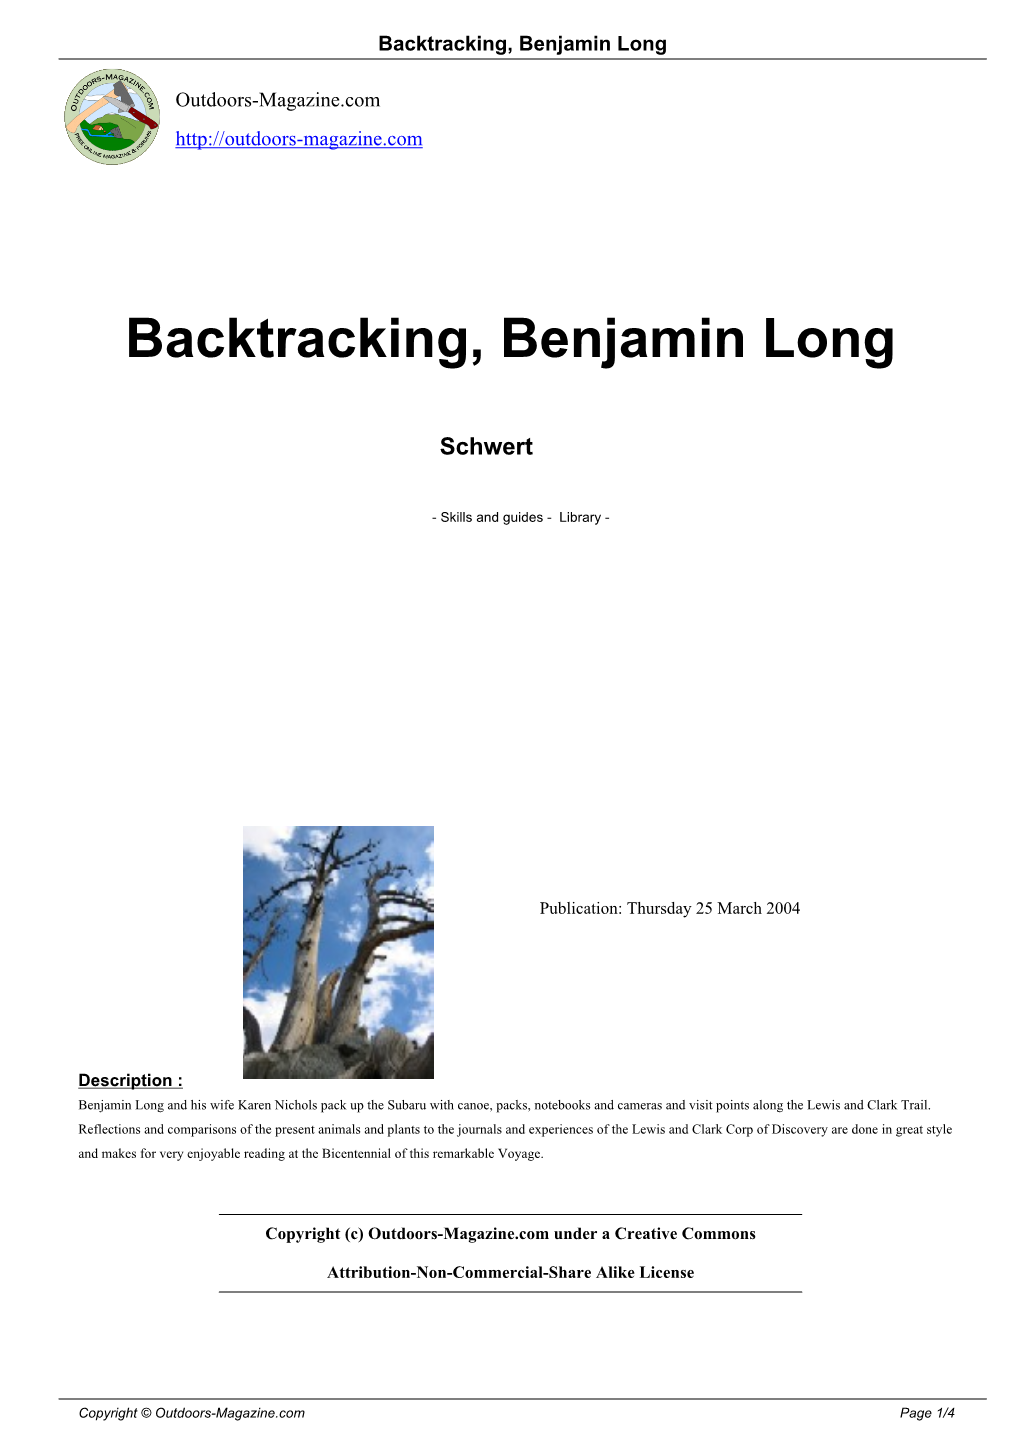 Backtracking-Benjami